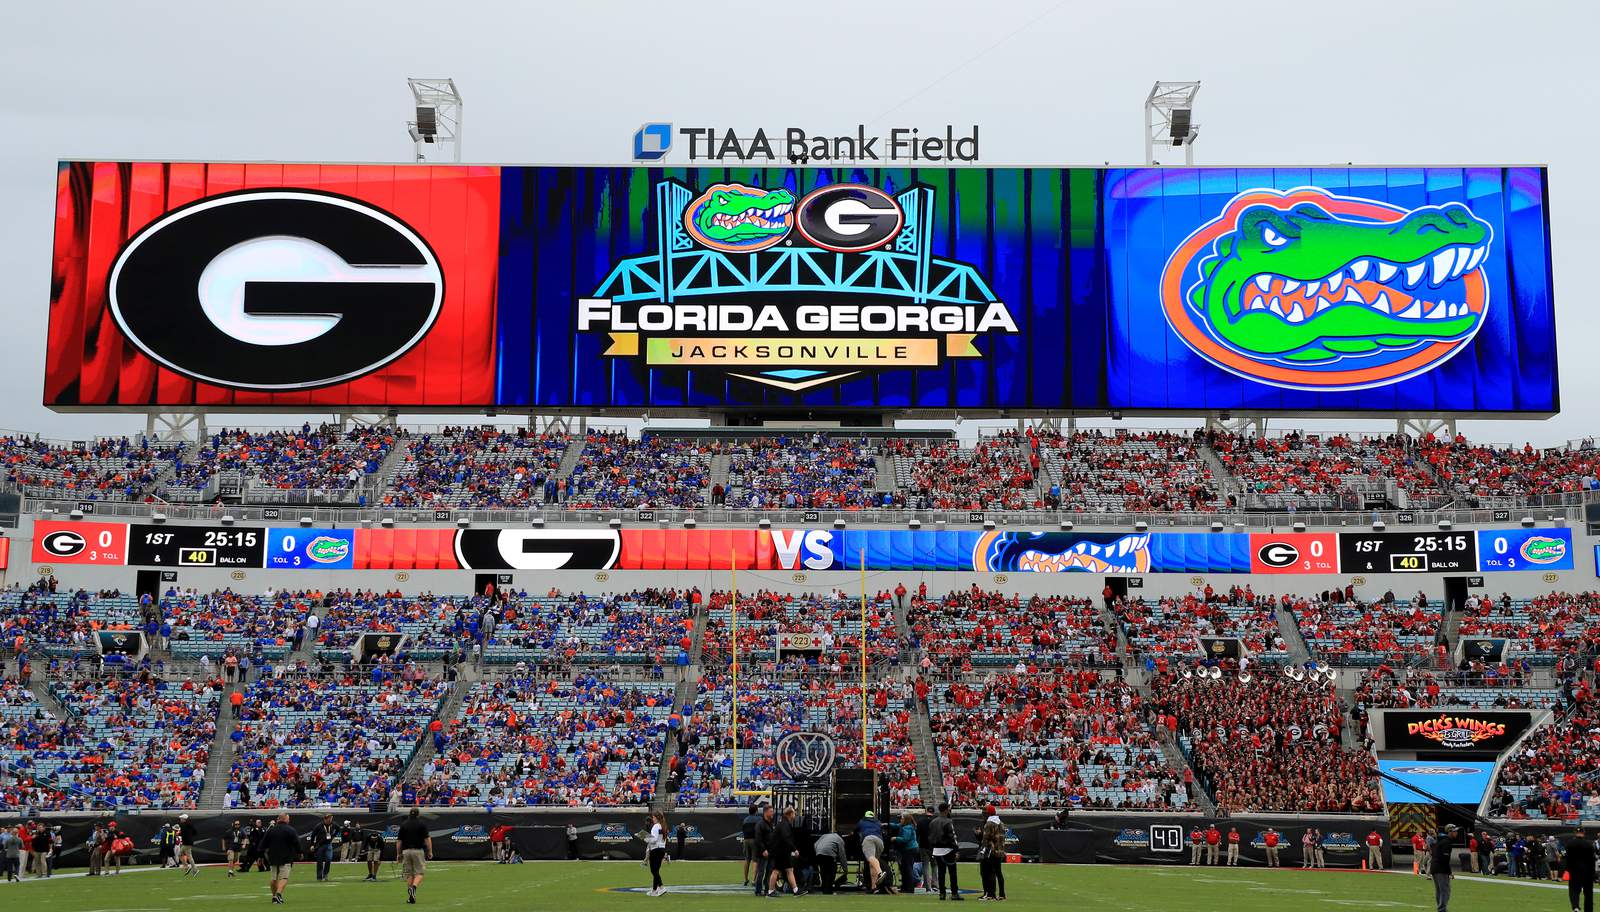 FloridaGeorgia football game gets 330 p.m. kickoff time this season